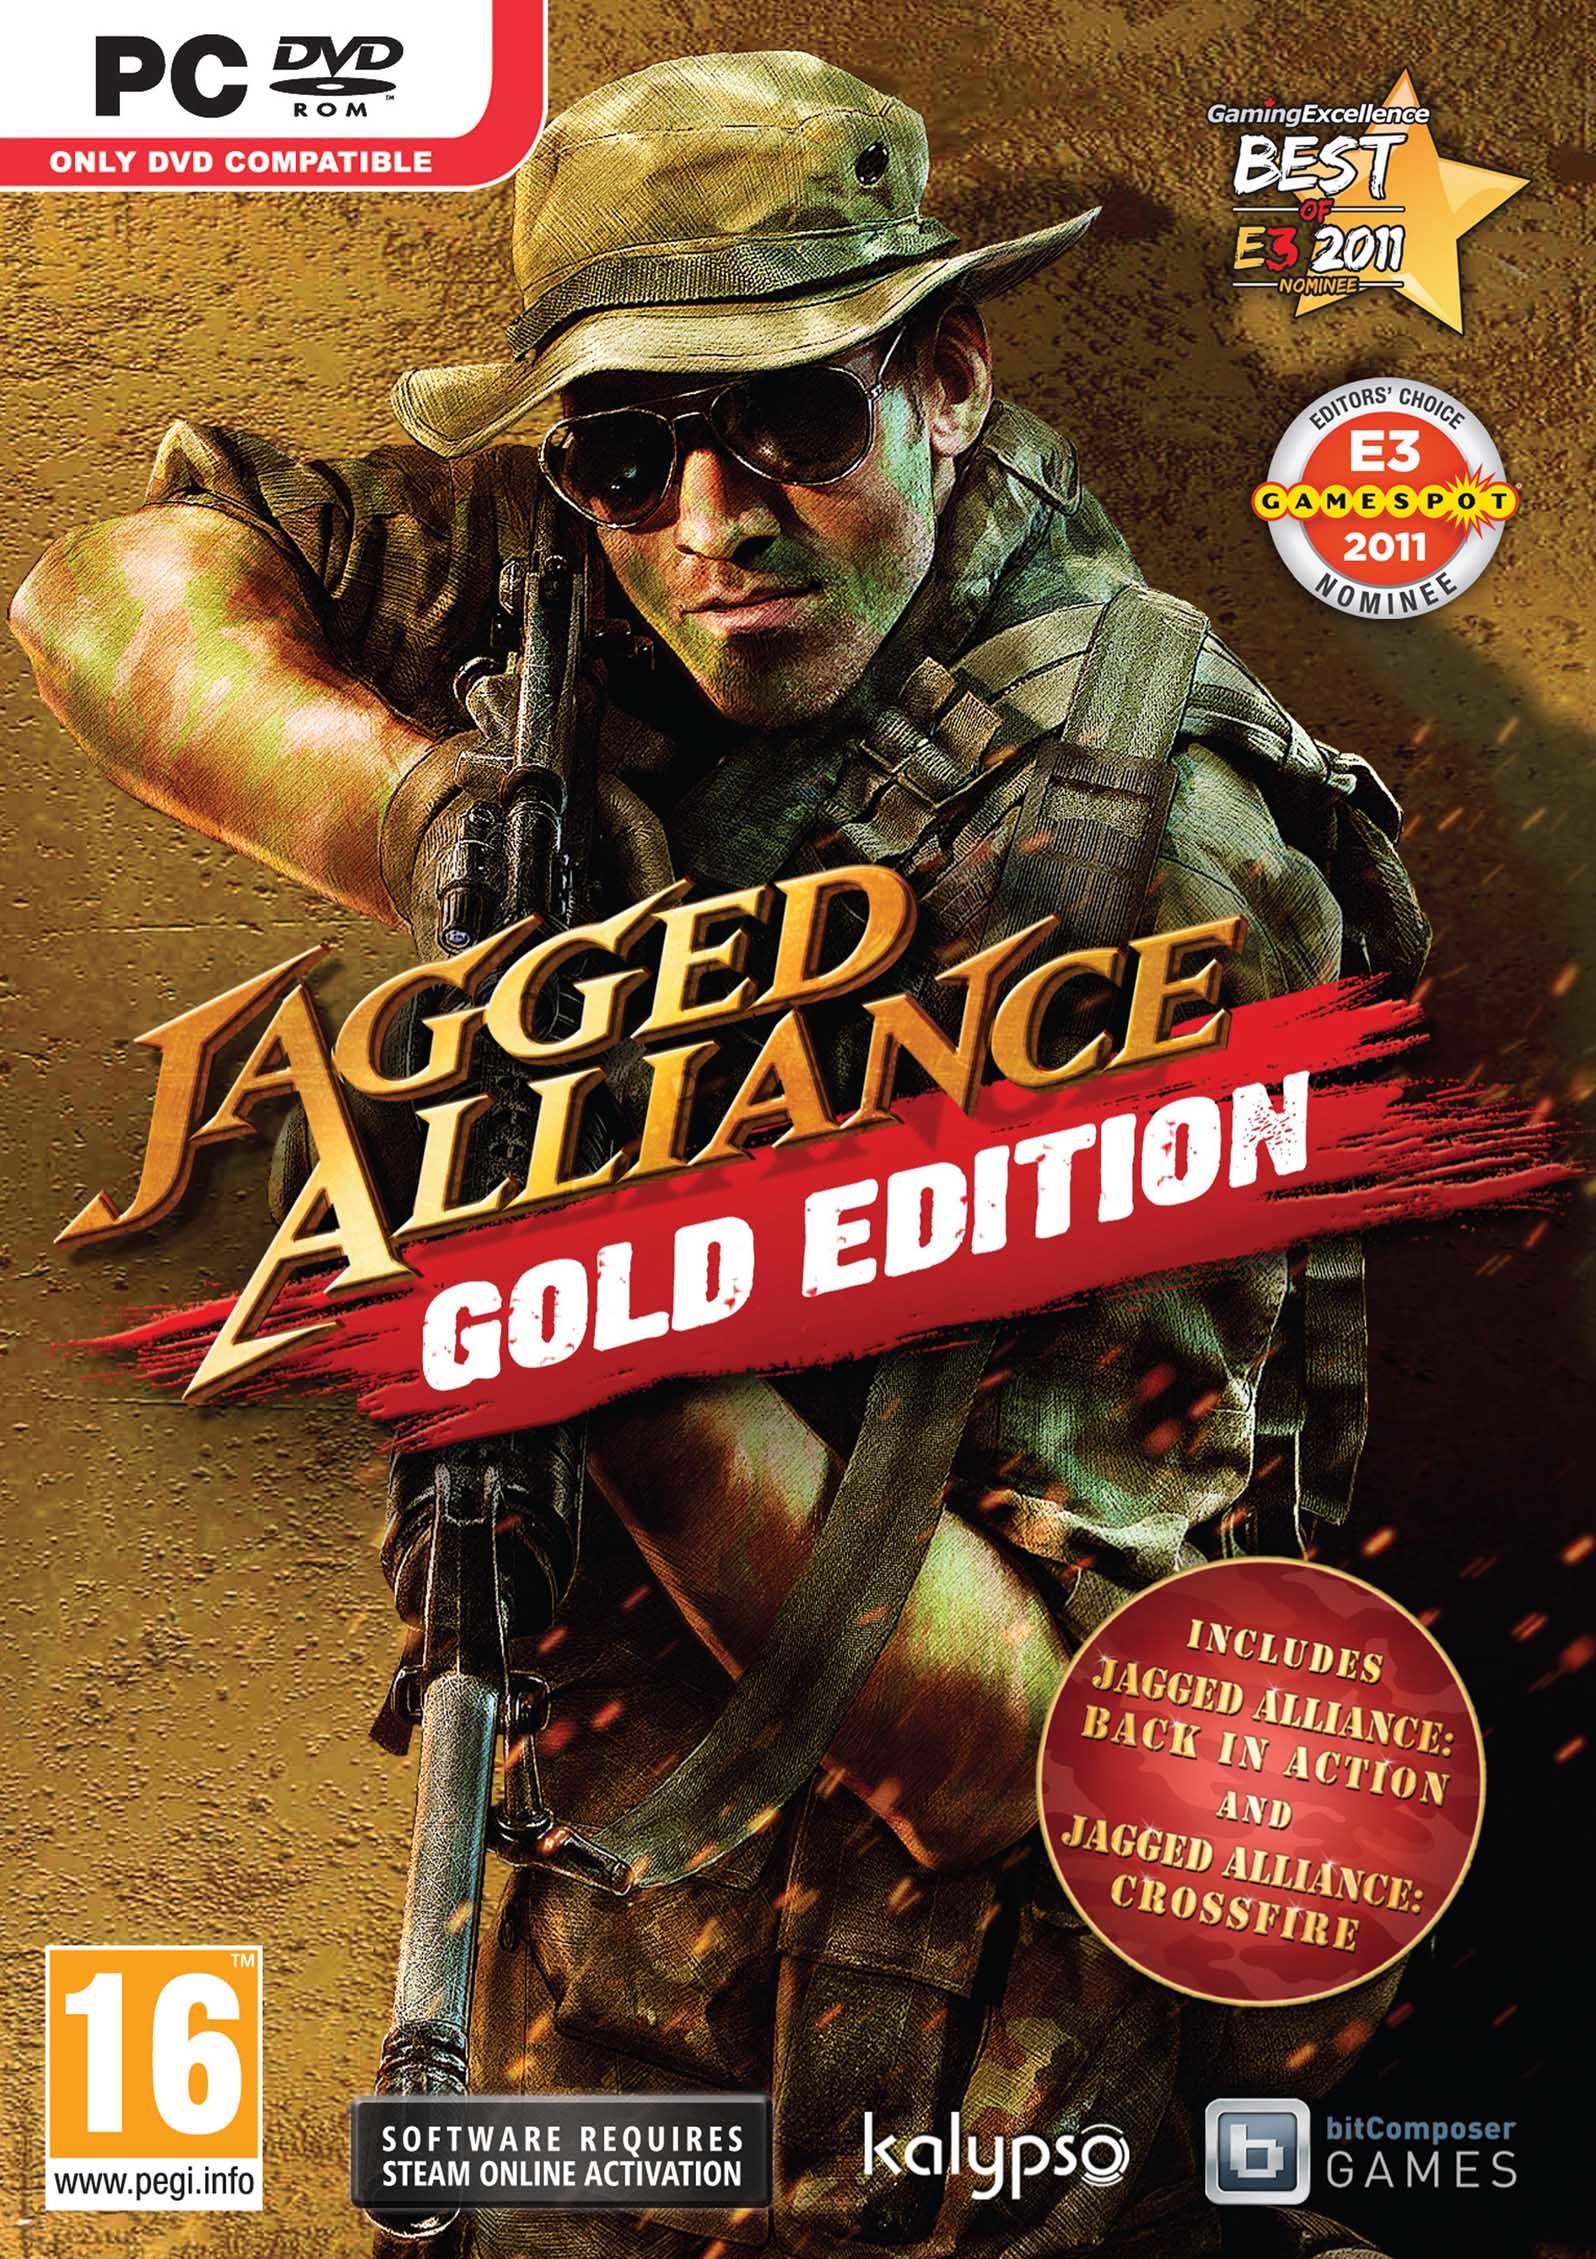 jagged alliance 2 gold multiple mercs